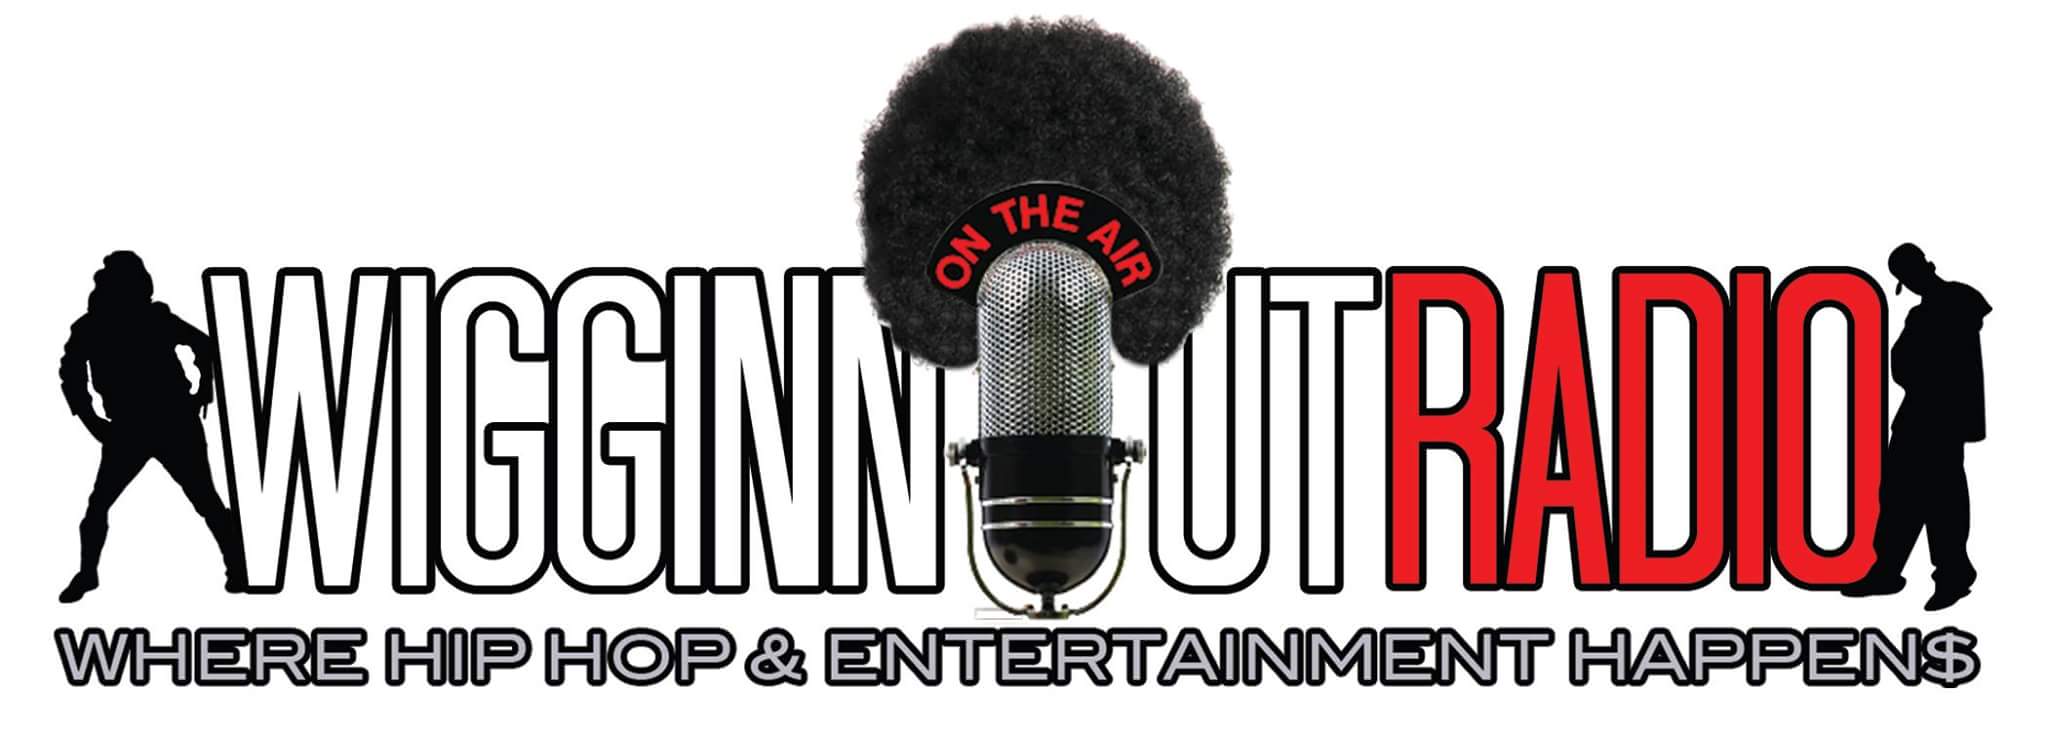 The Wigginnin' Out Radio Show  5 21 17